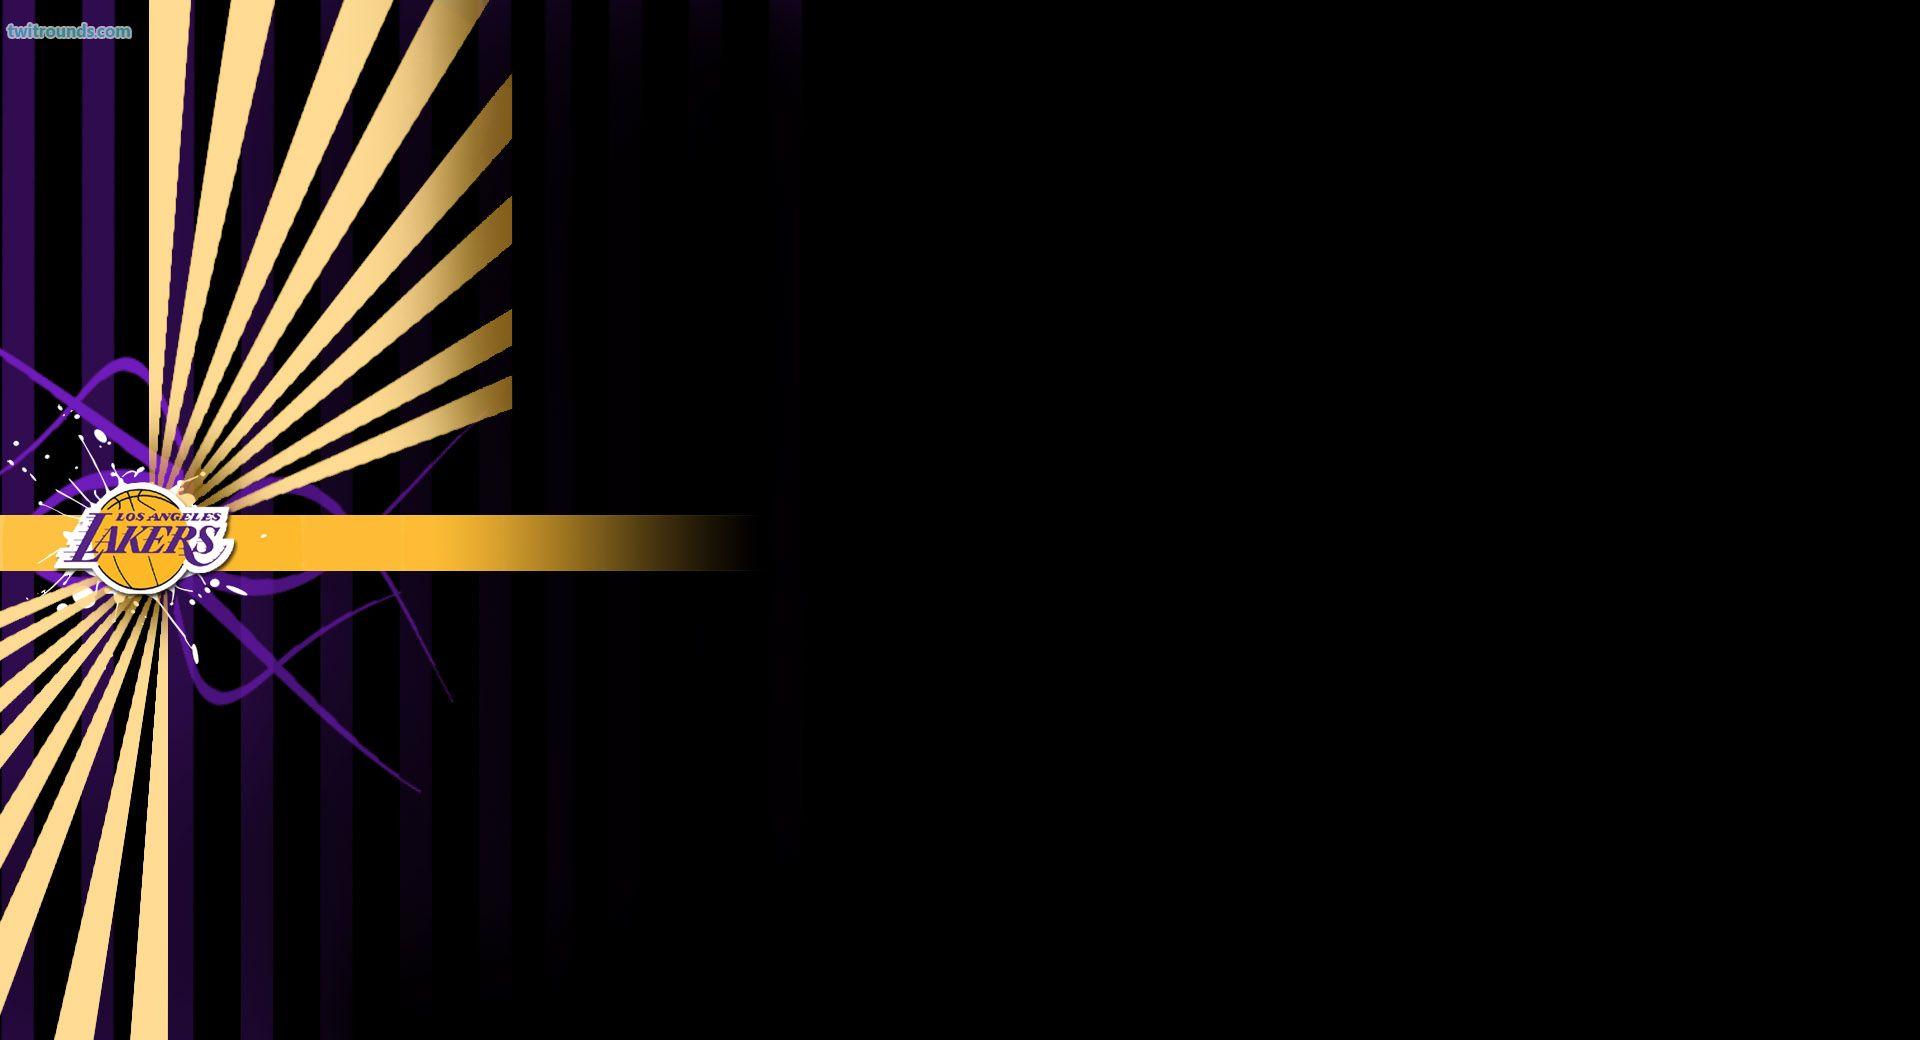 Los Angeles Lakers Logo Wallpaper. High Definition Wallpaper